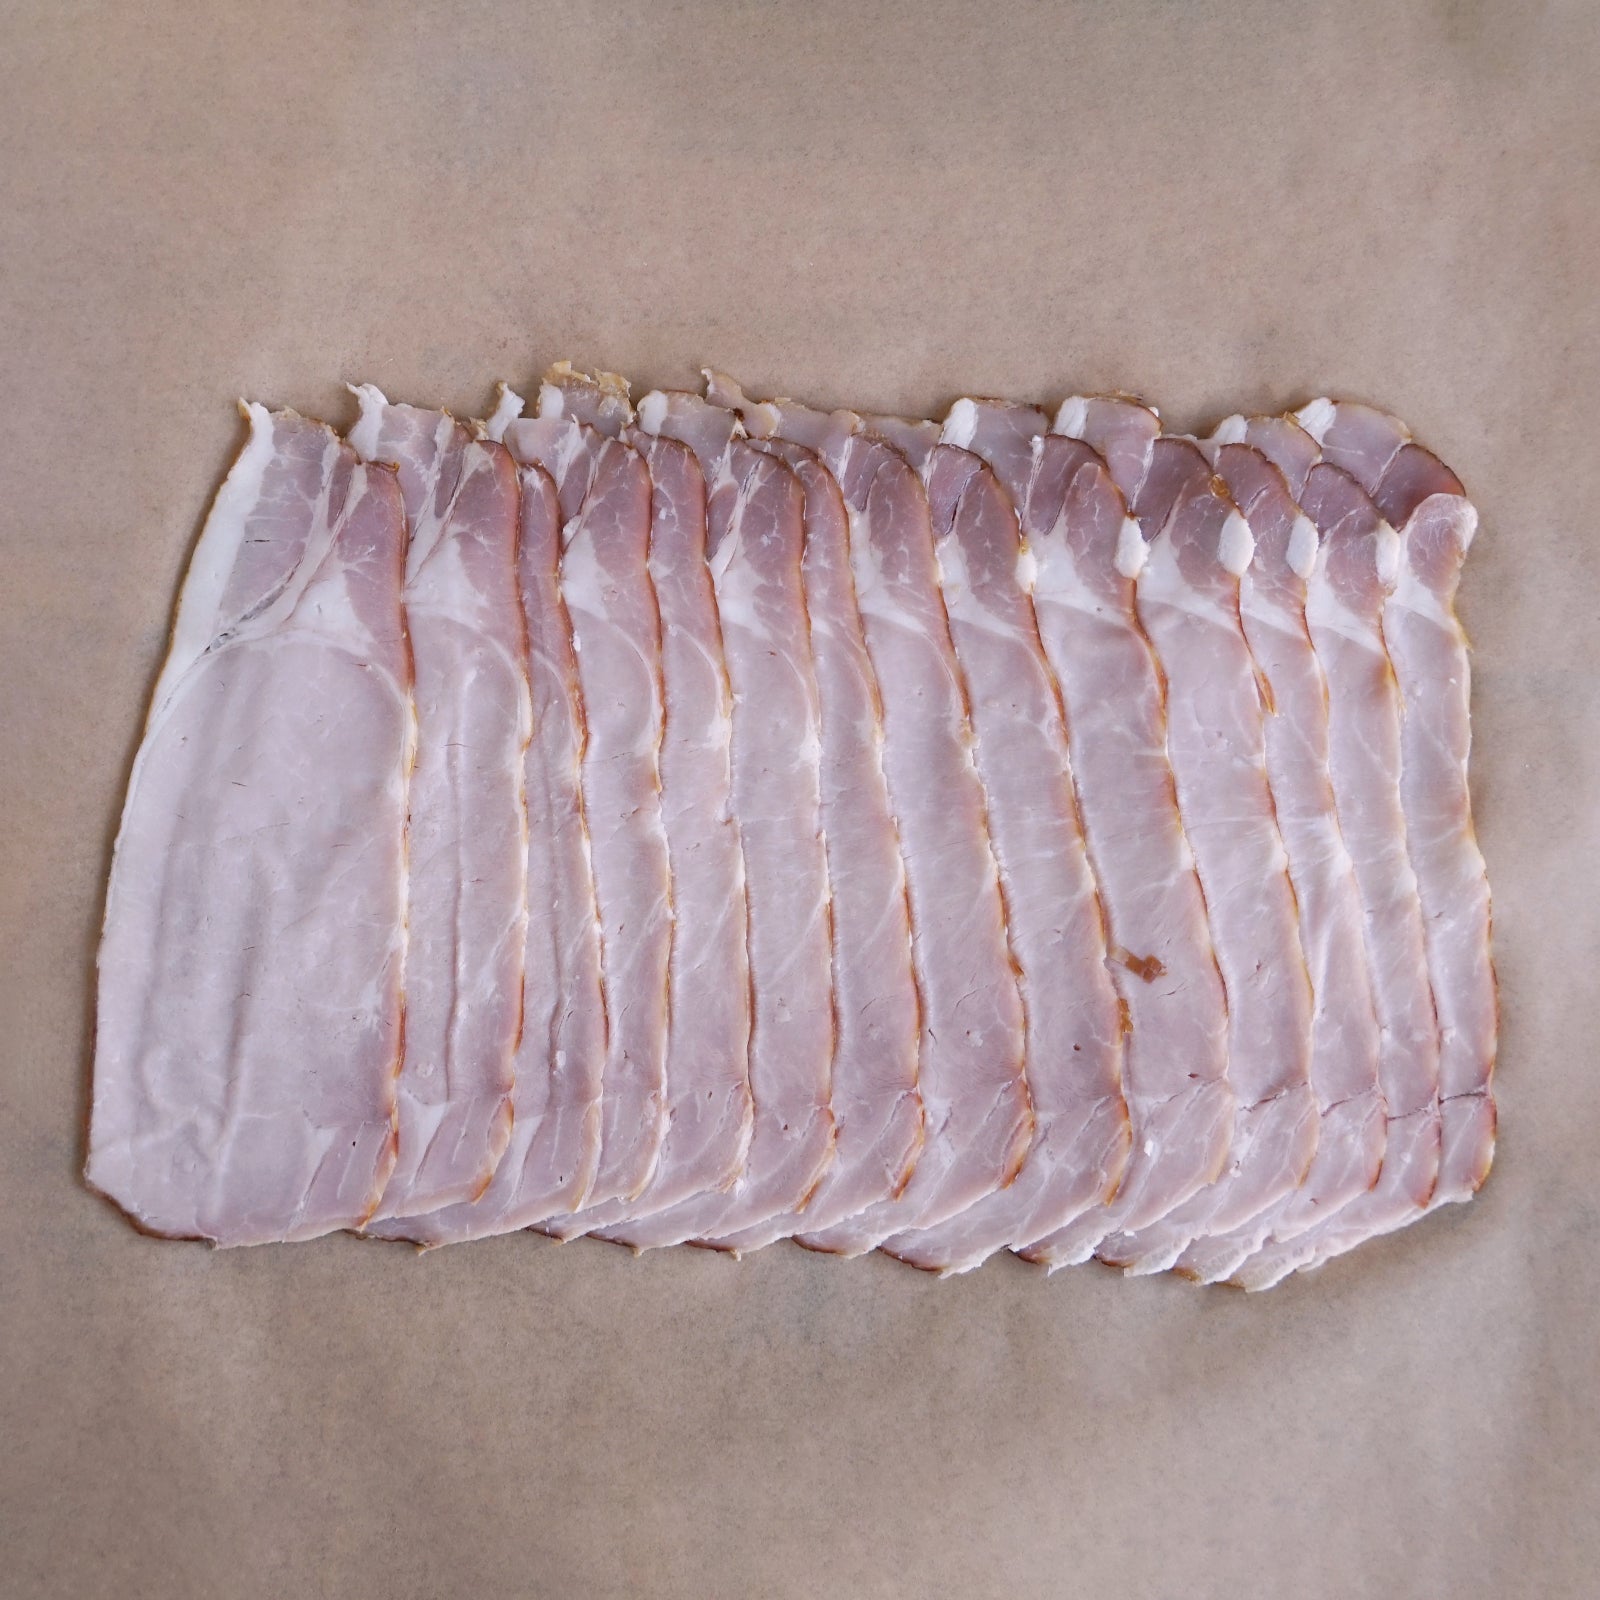 Canadian Style Bacon / Back Bacon